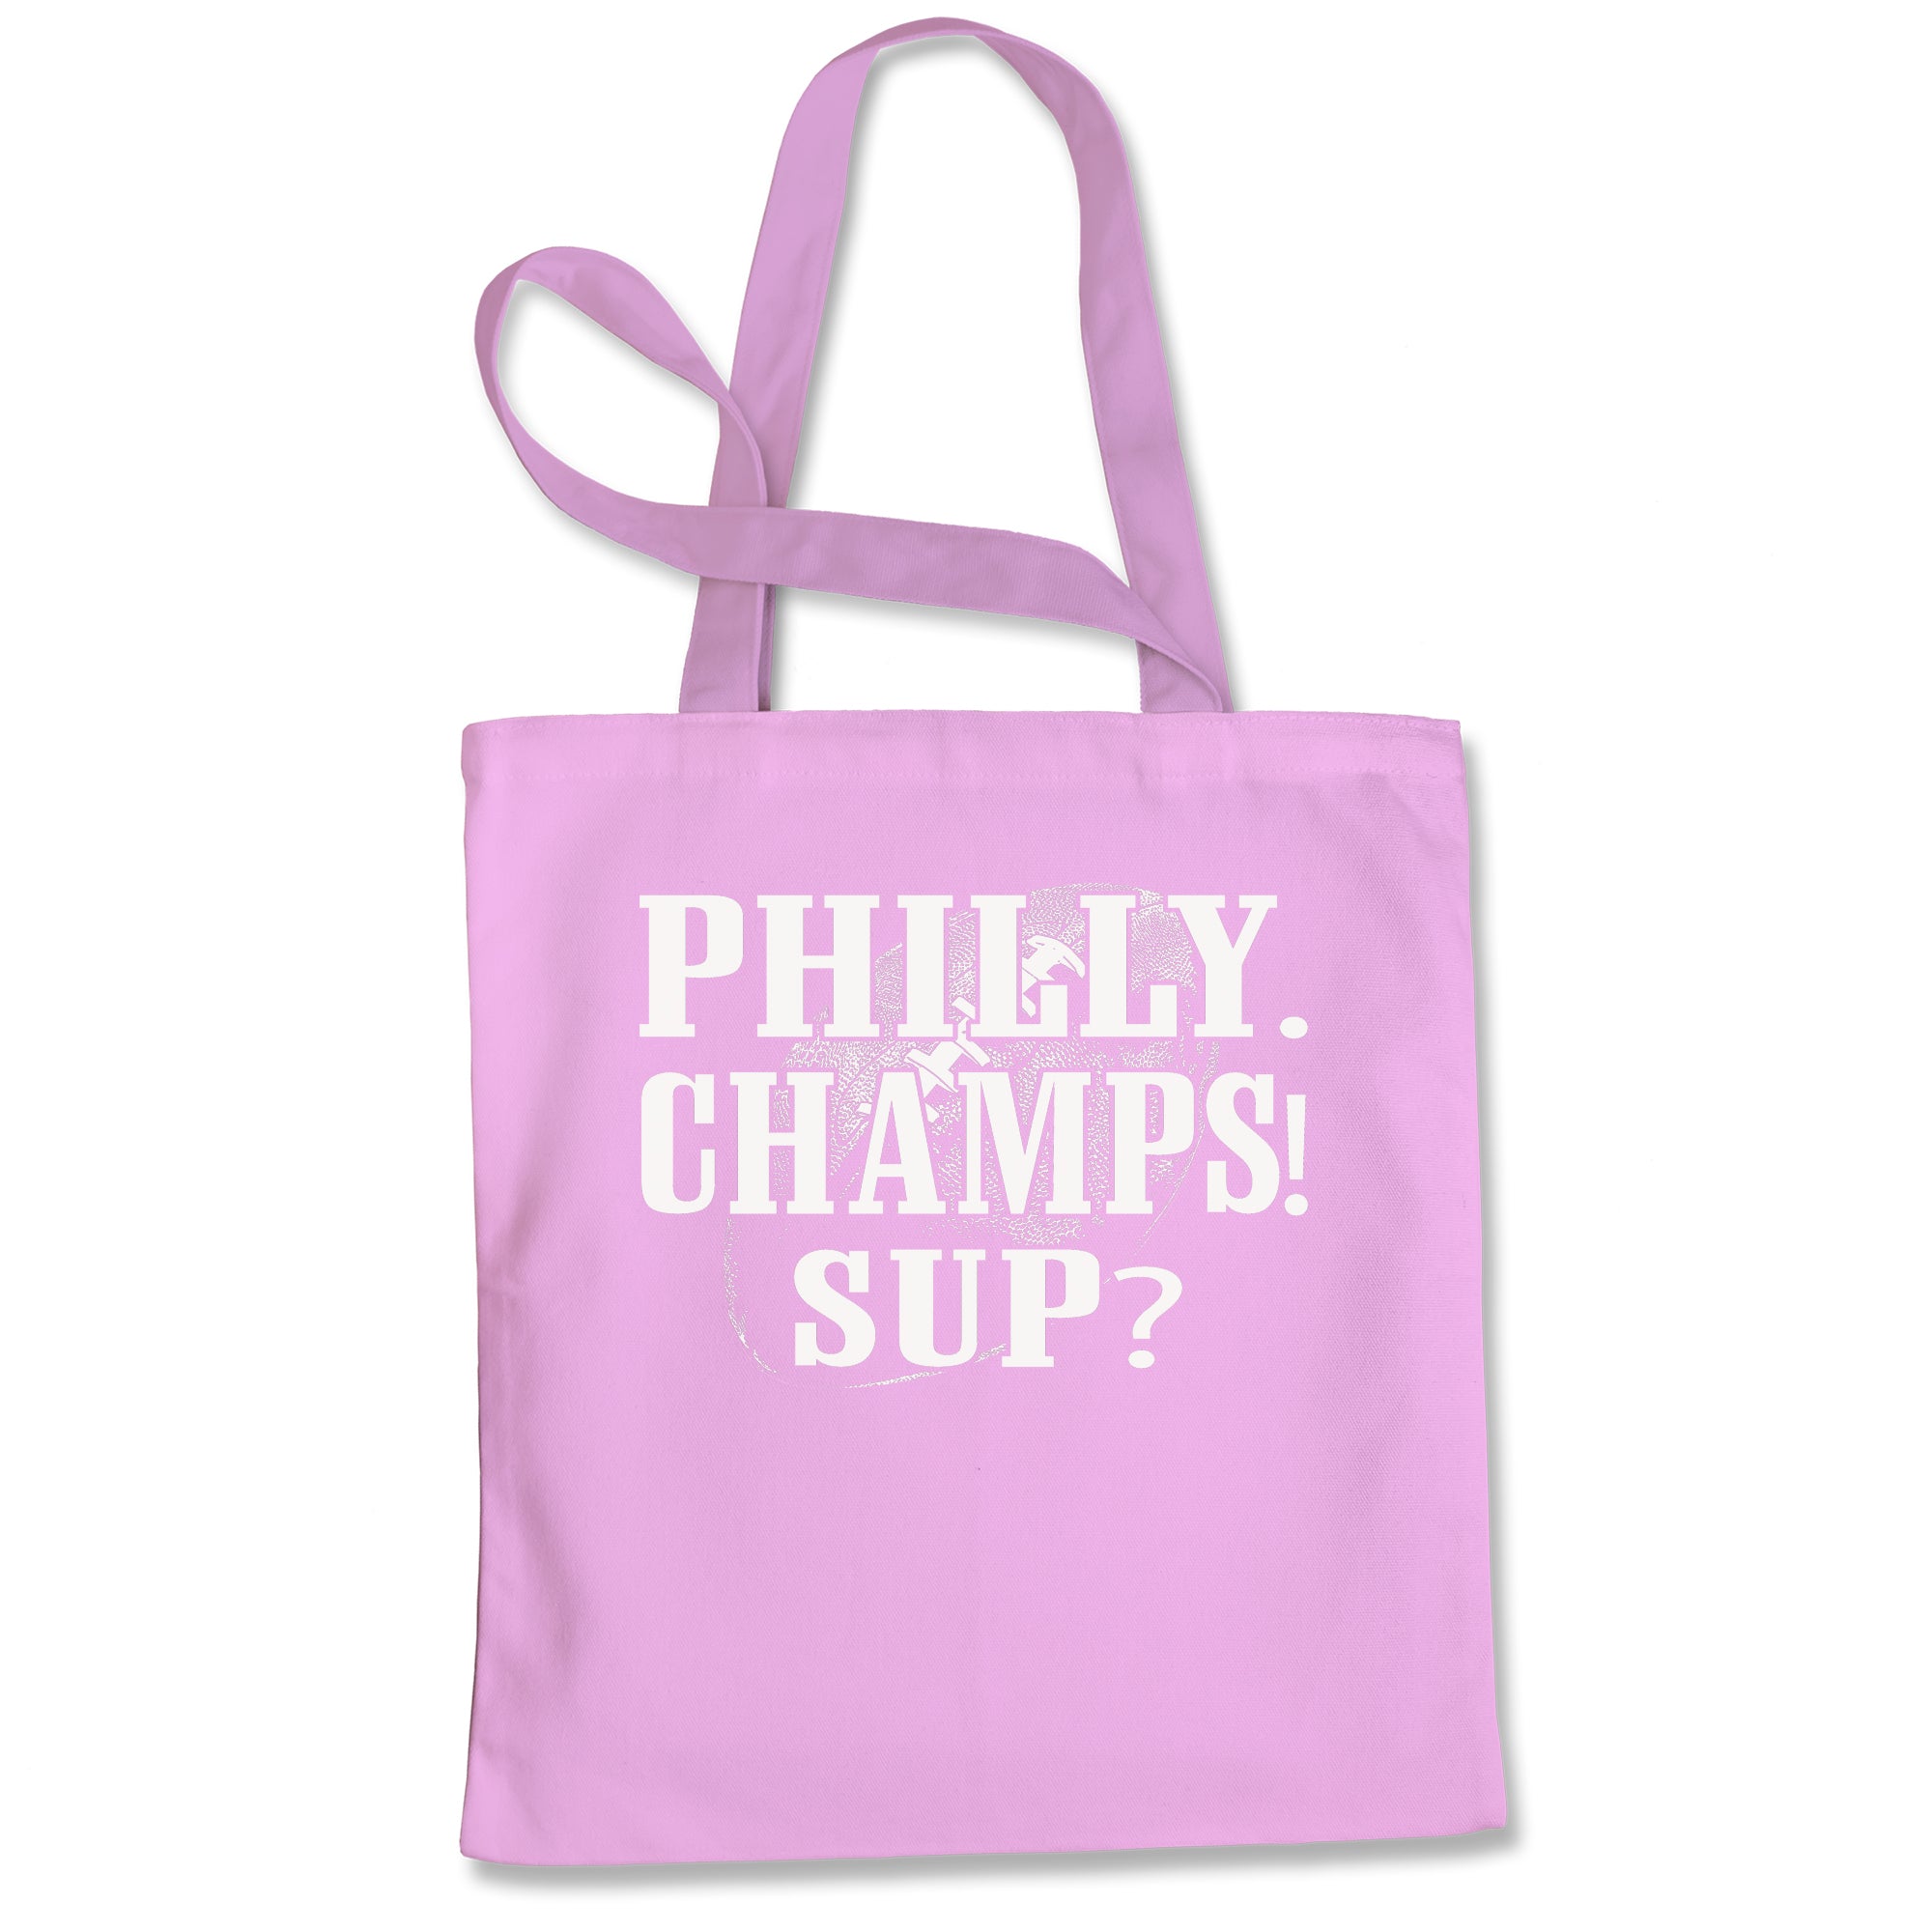 Philadelphia Football Champions 2017 Tote Bag